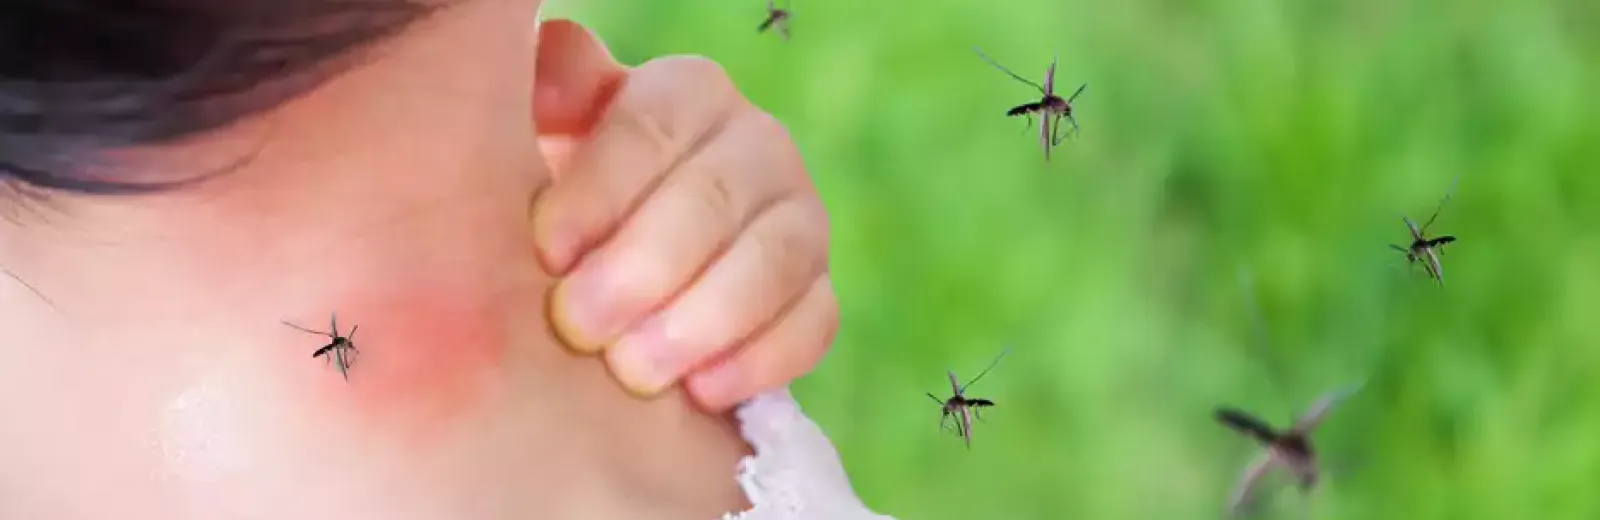 moquito-itching